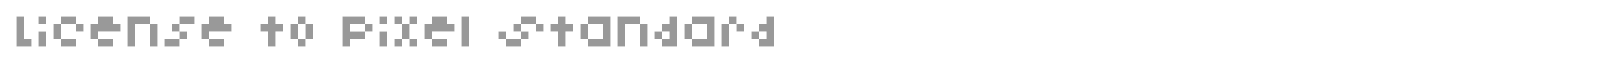 Font License to Pixel Standard